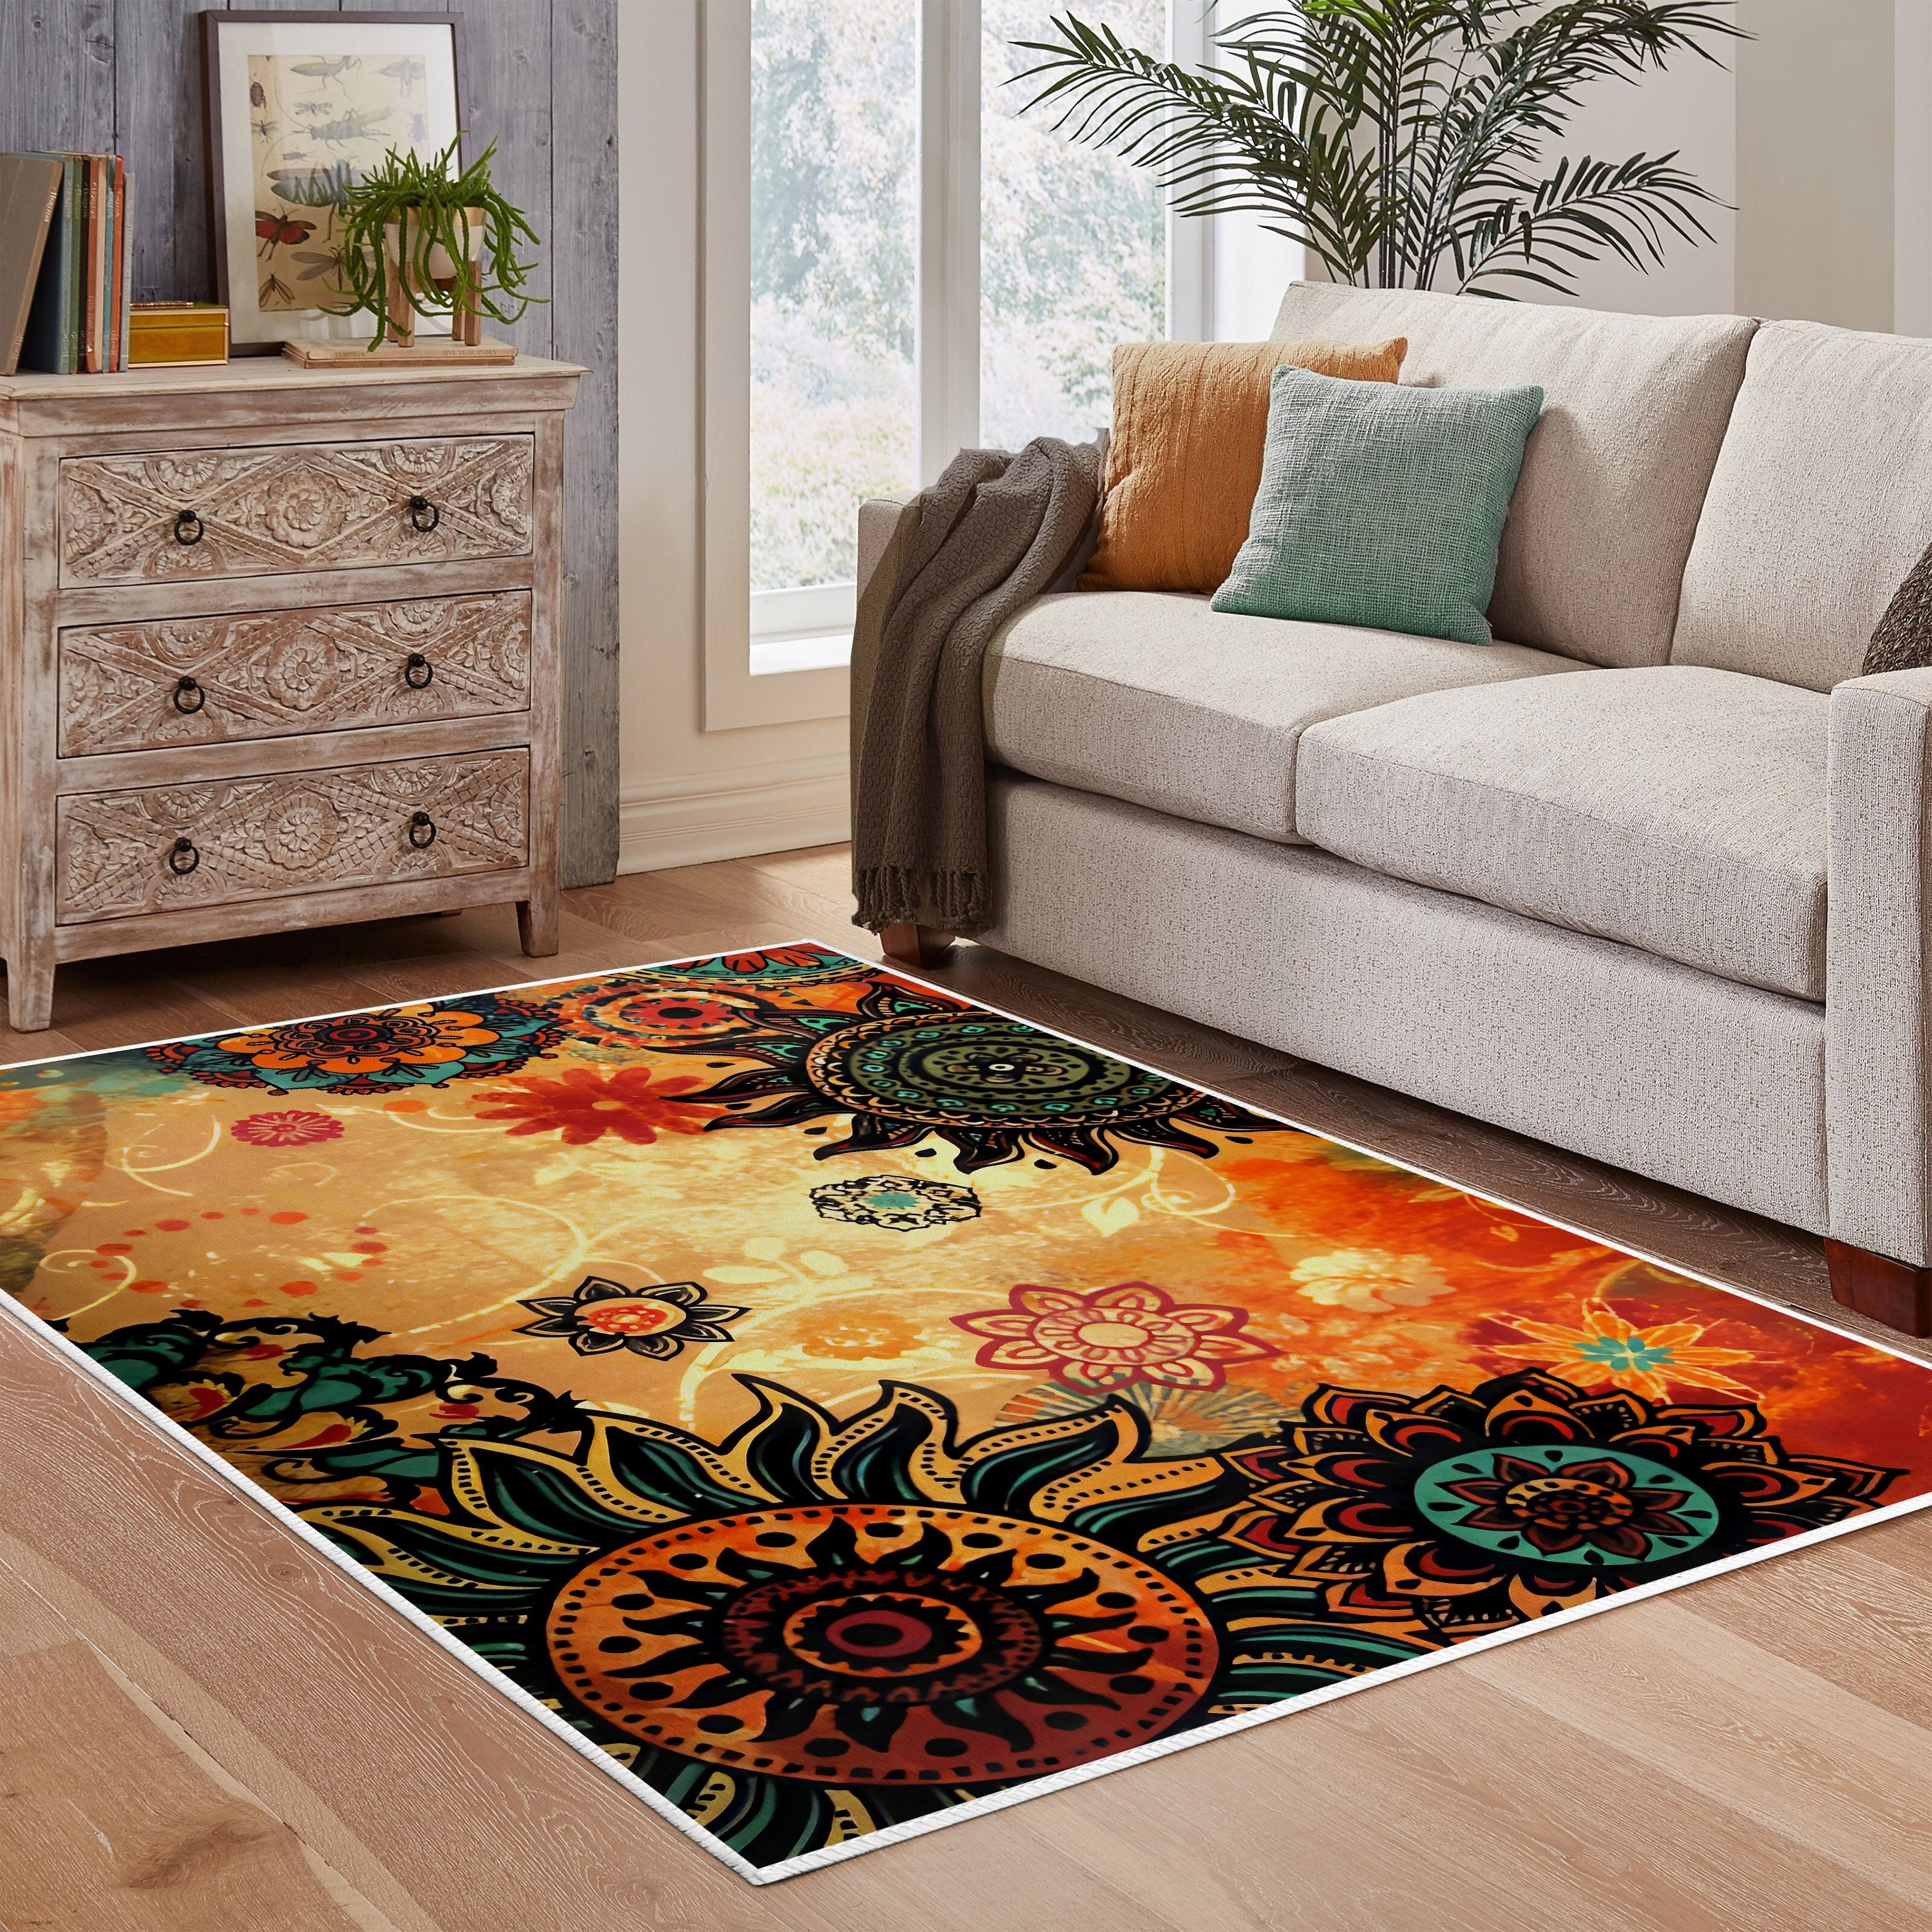 Boho Floral Floor Mat Home Entry Door Floor Mat Living Room Carpet